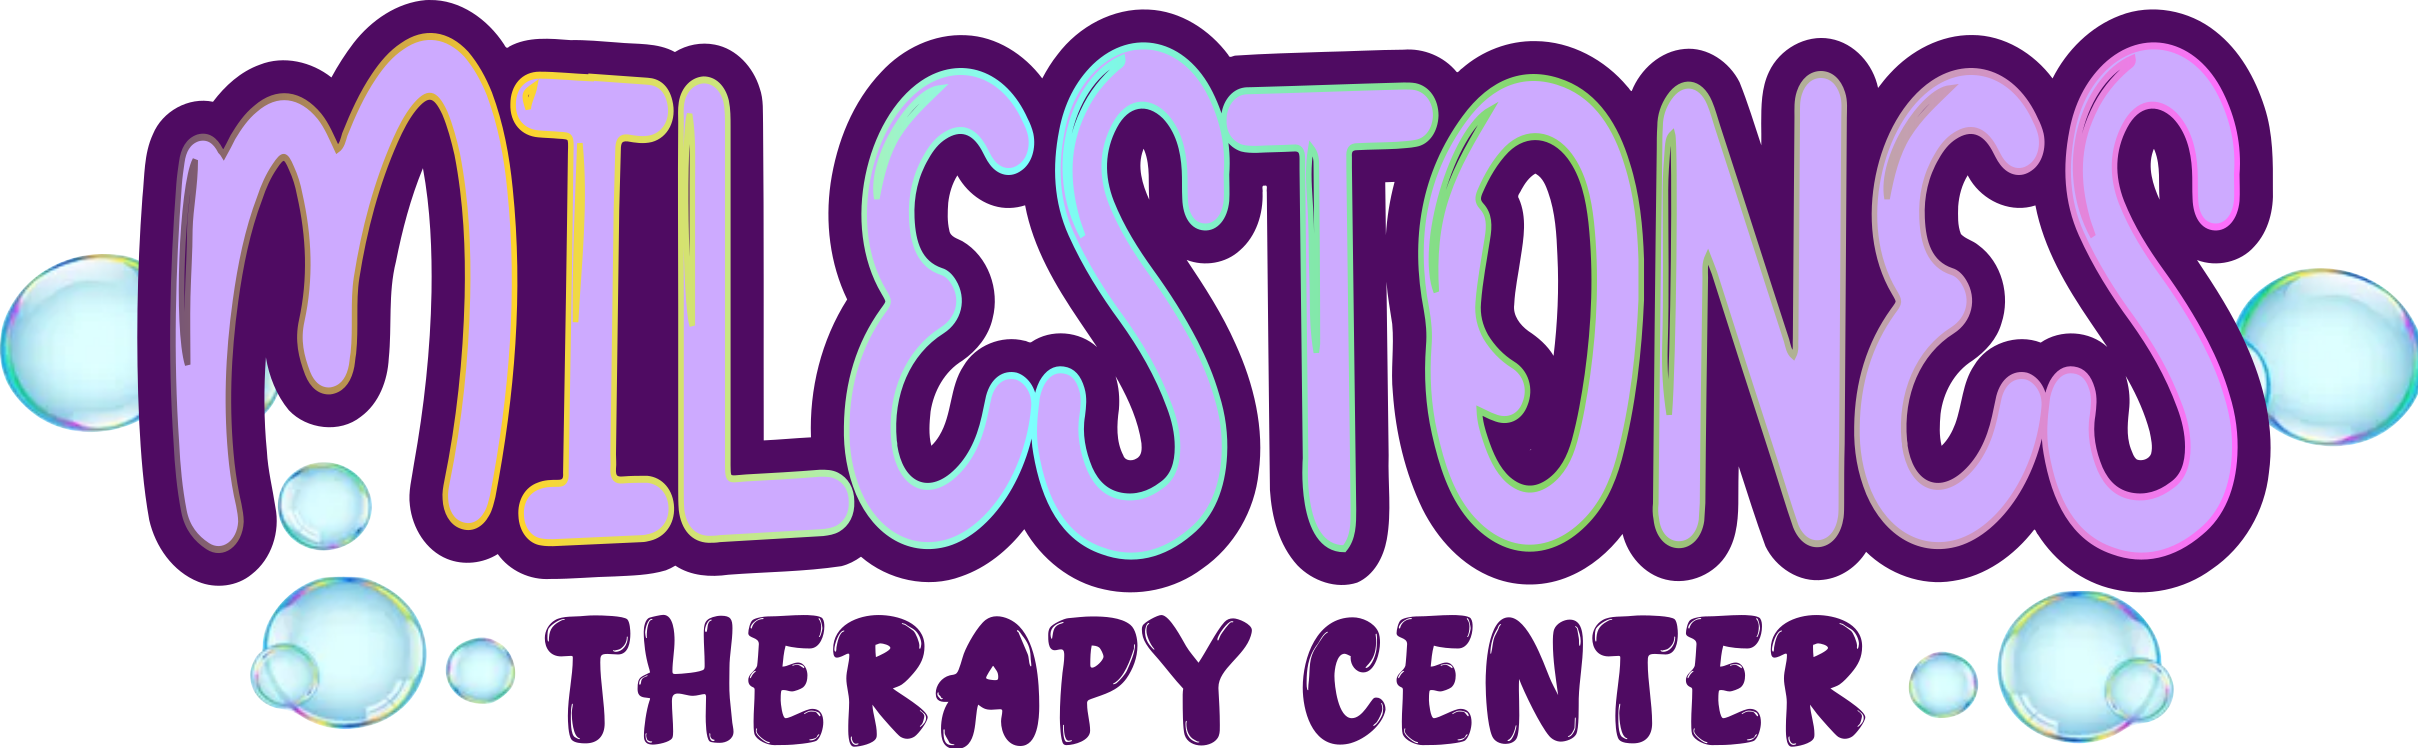 Milestones Therapy Center